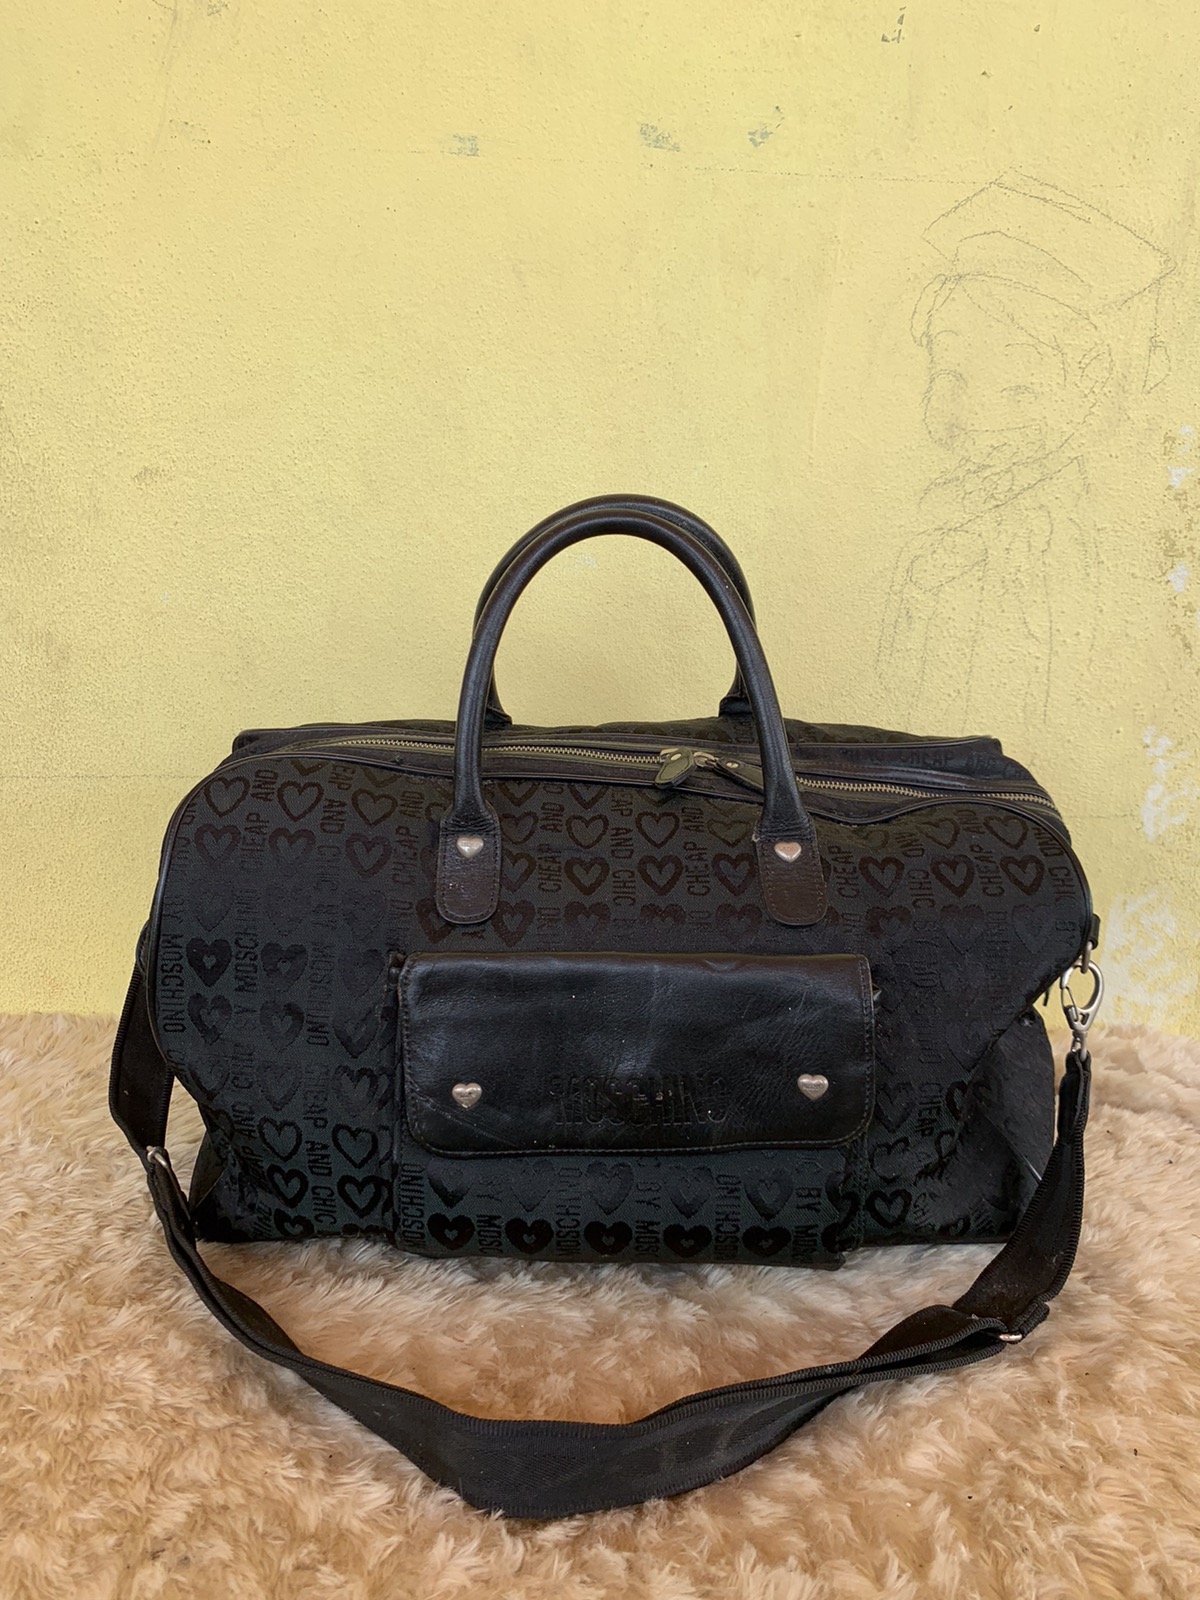 Authentic MOSCHINO Travel/Duffle Bag - 1